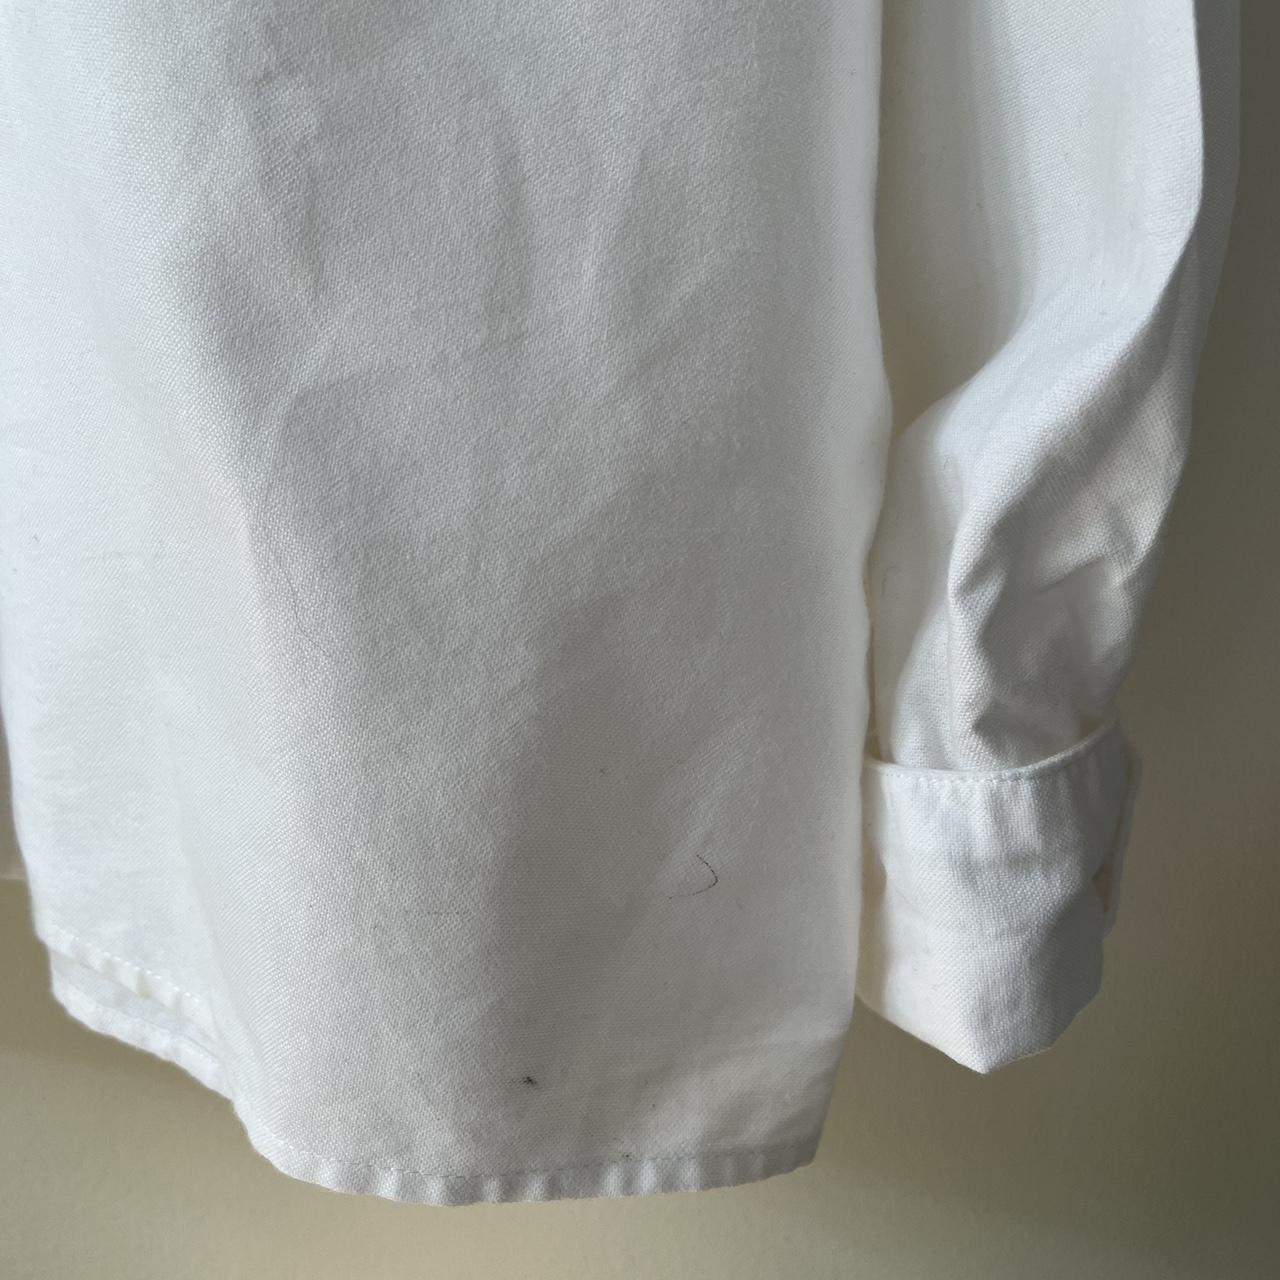 Djerf Avenue Women's White Shirt (5)